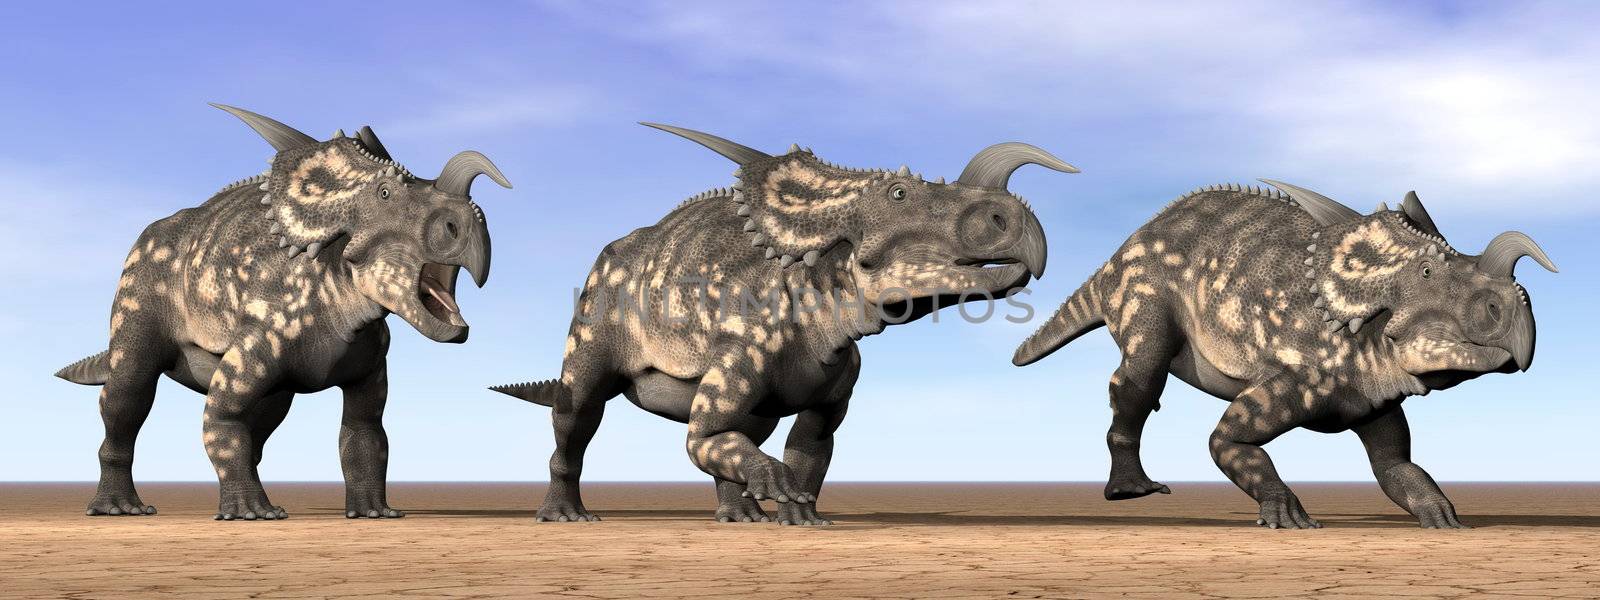 Einiosaurus dinosaurs in the desert - 3D render by Elenaphotos21